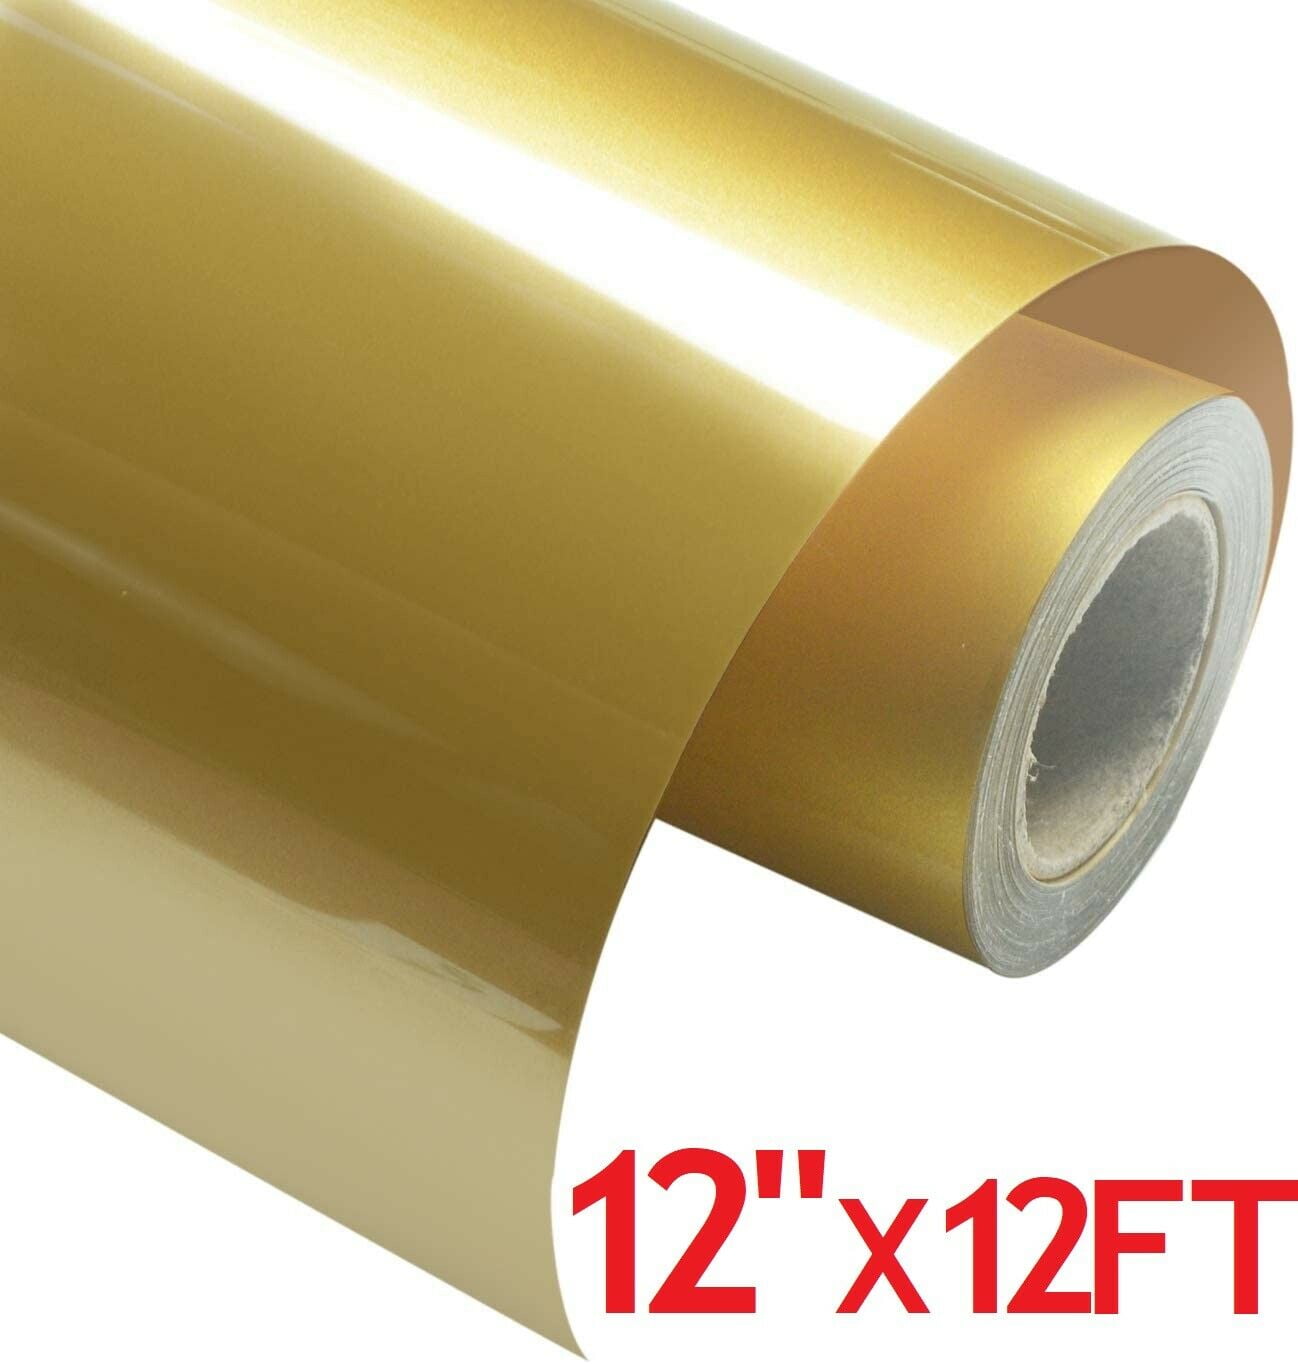 12 Xpress 2.0 Heat Transfer Vinyl x 10 yards - Gold - CLEARANCE